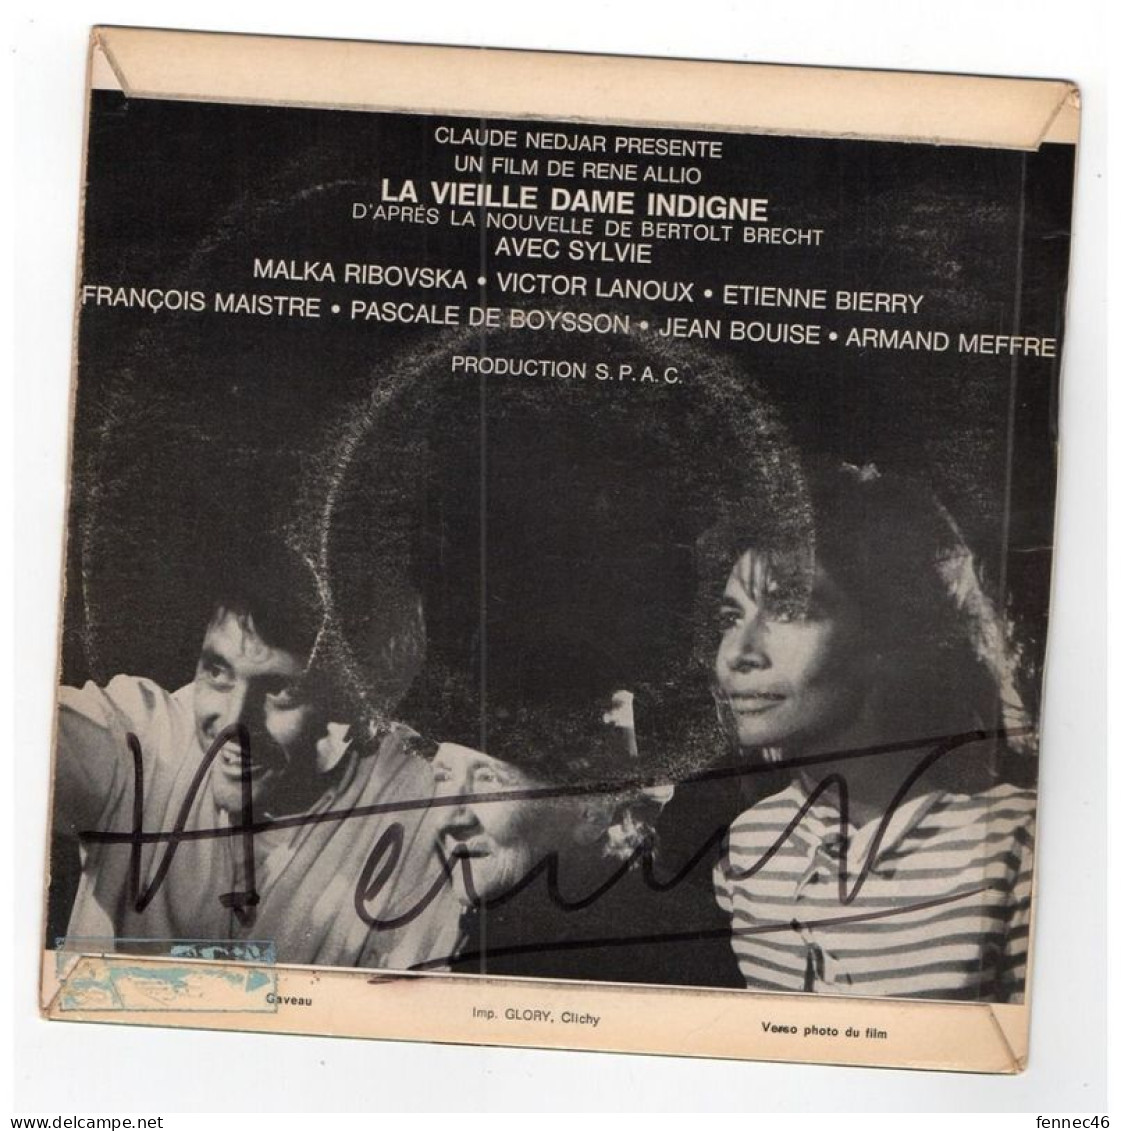 * Vinyle  45T (EP 4 Titres) Jean FERRAT   B O Du Film La Vieille Dame Indigne - Musica Di Film